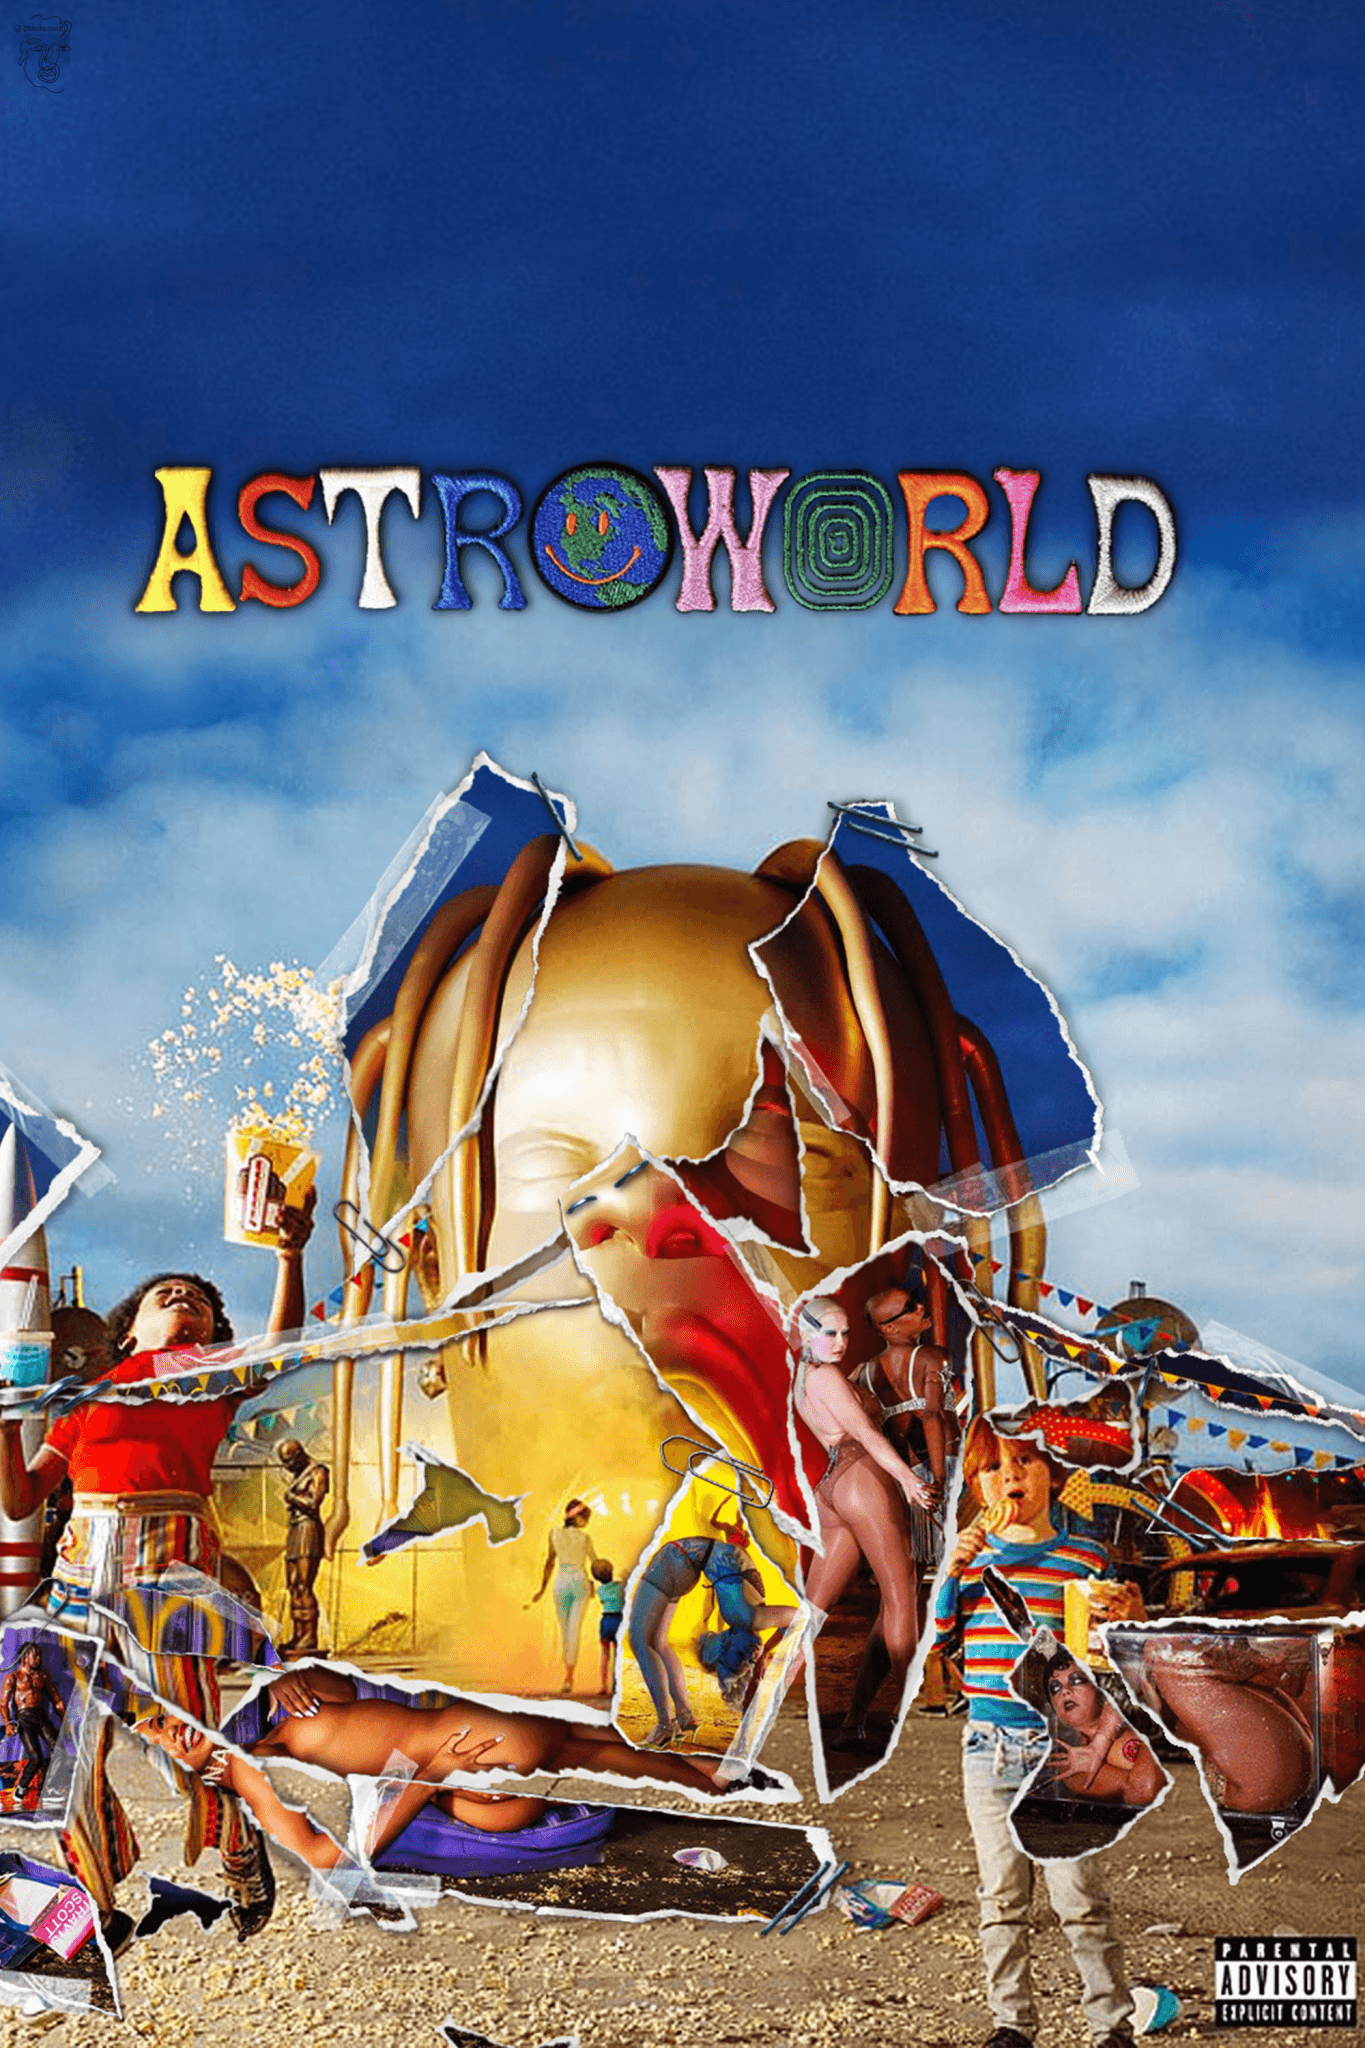 Travis Scott "Astroworld Album" Poster - Posters Plug